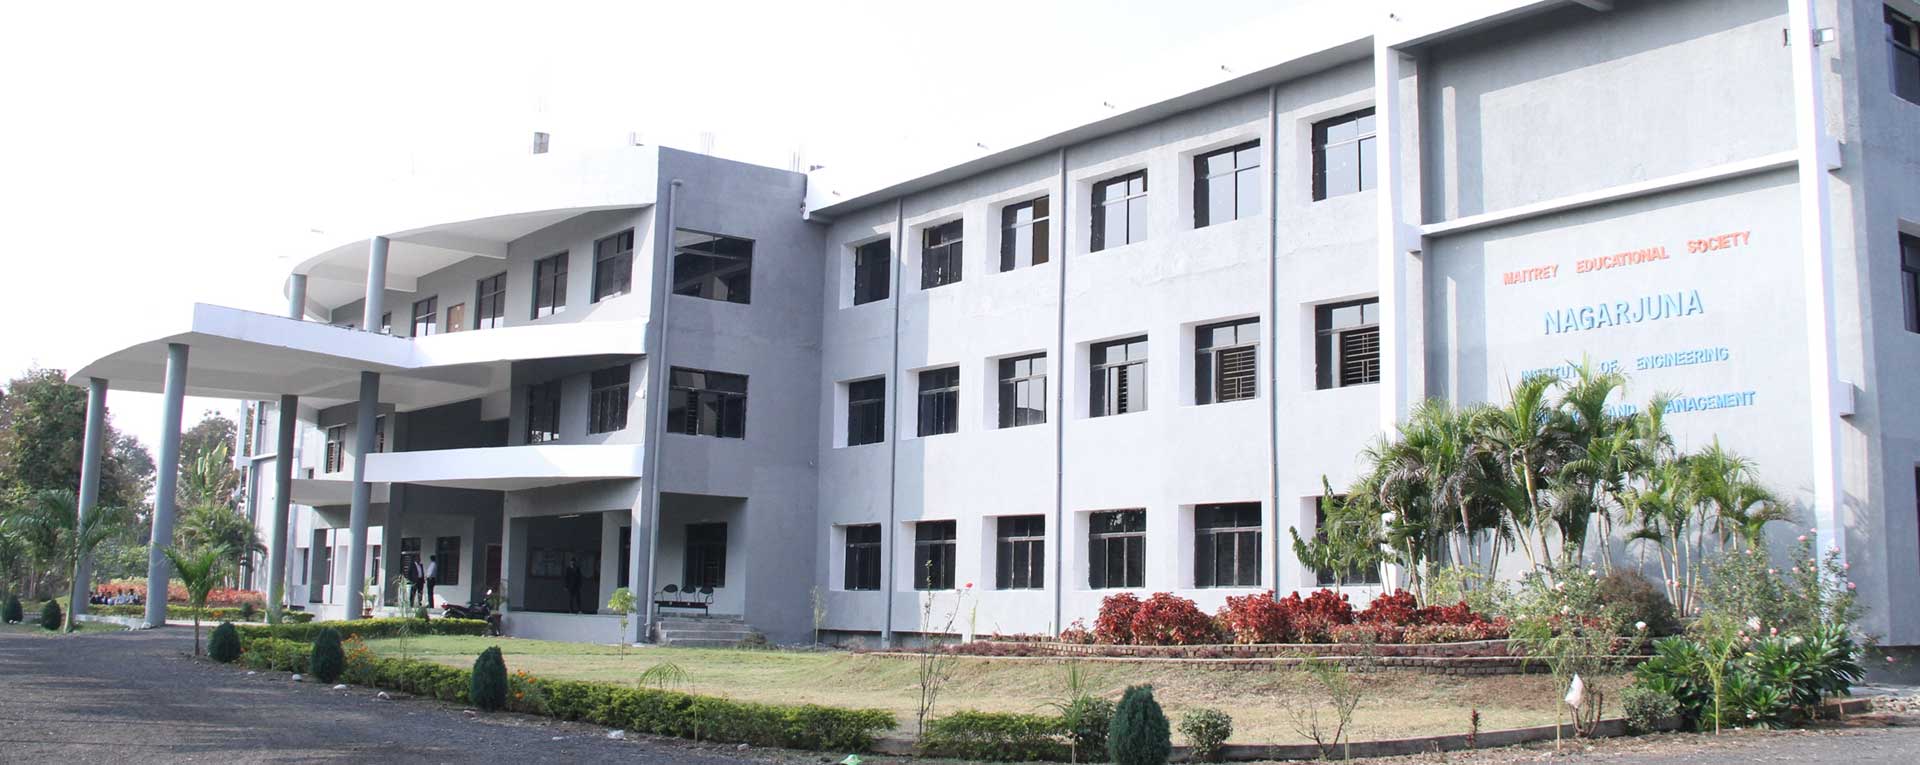 Nagarjuna Institute of Engineering Technology & Management, NIETM ...